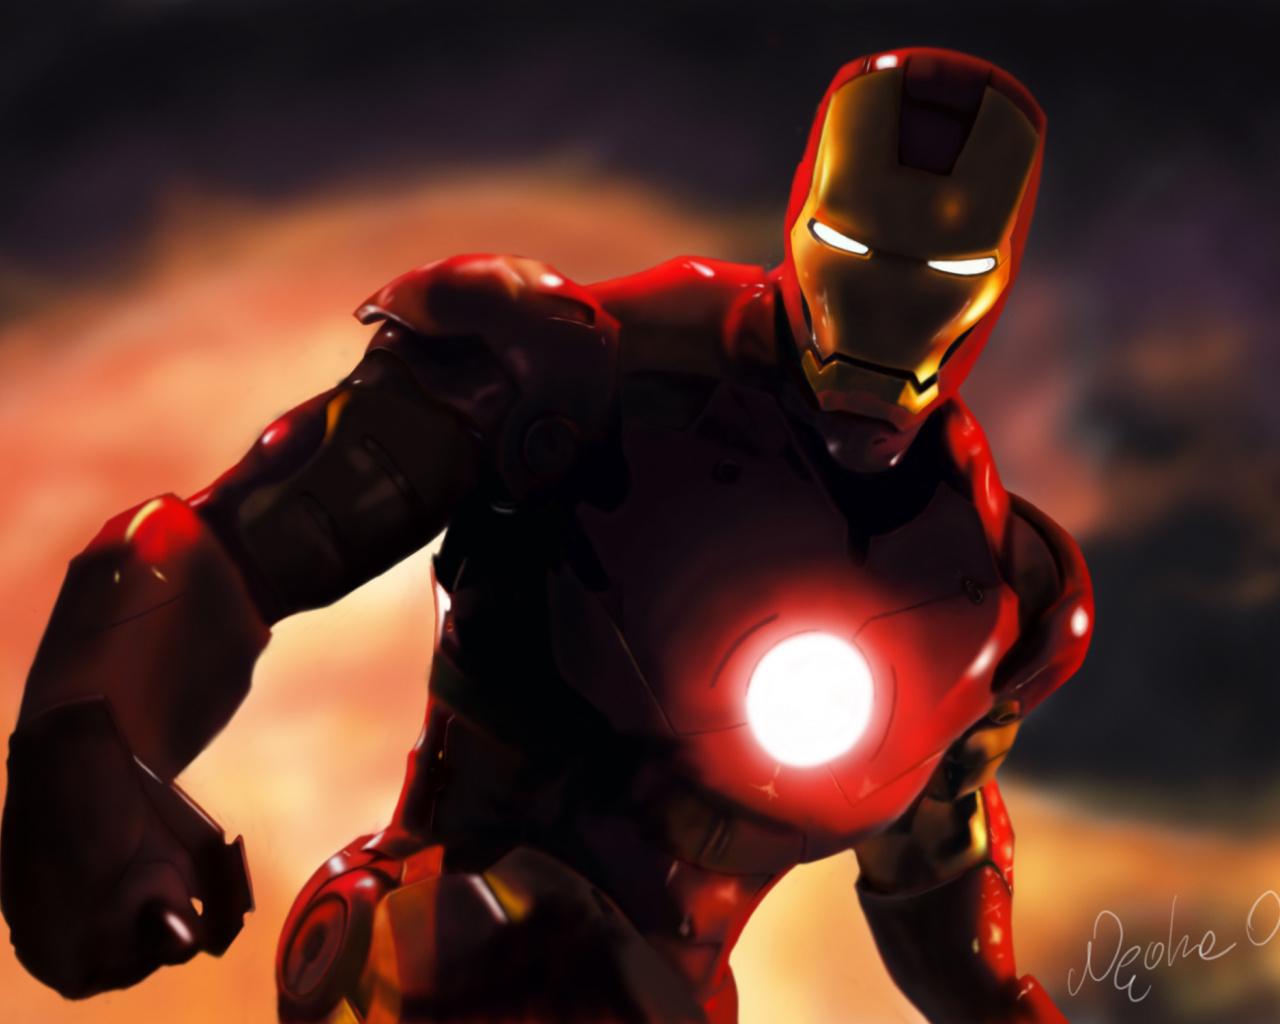 Download 1280x1024 Wallpaper Iron Man, Dark, Superhero, Standard 5:4